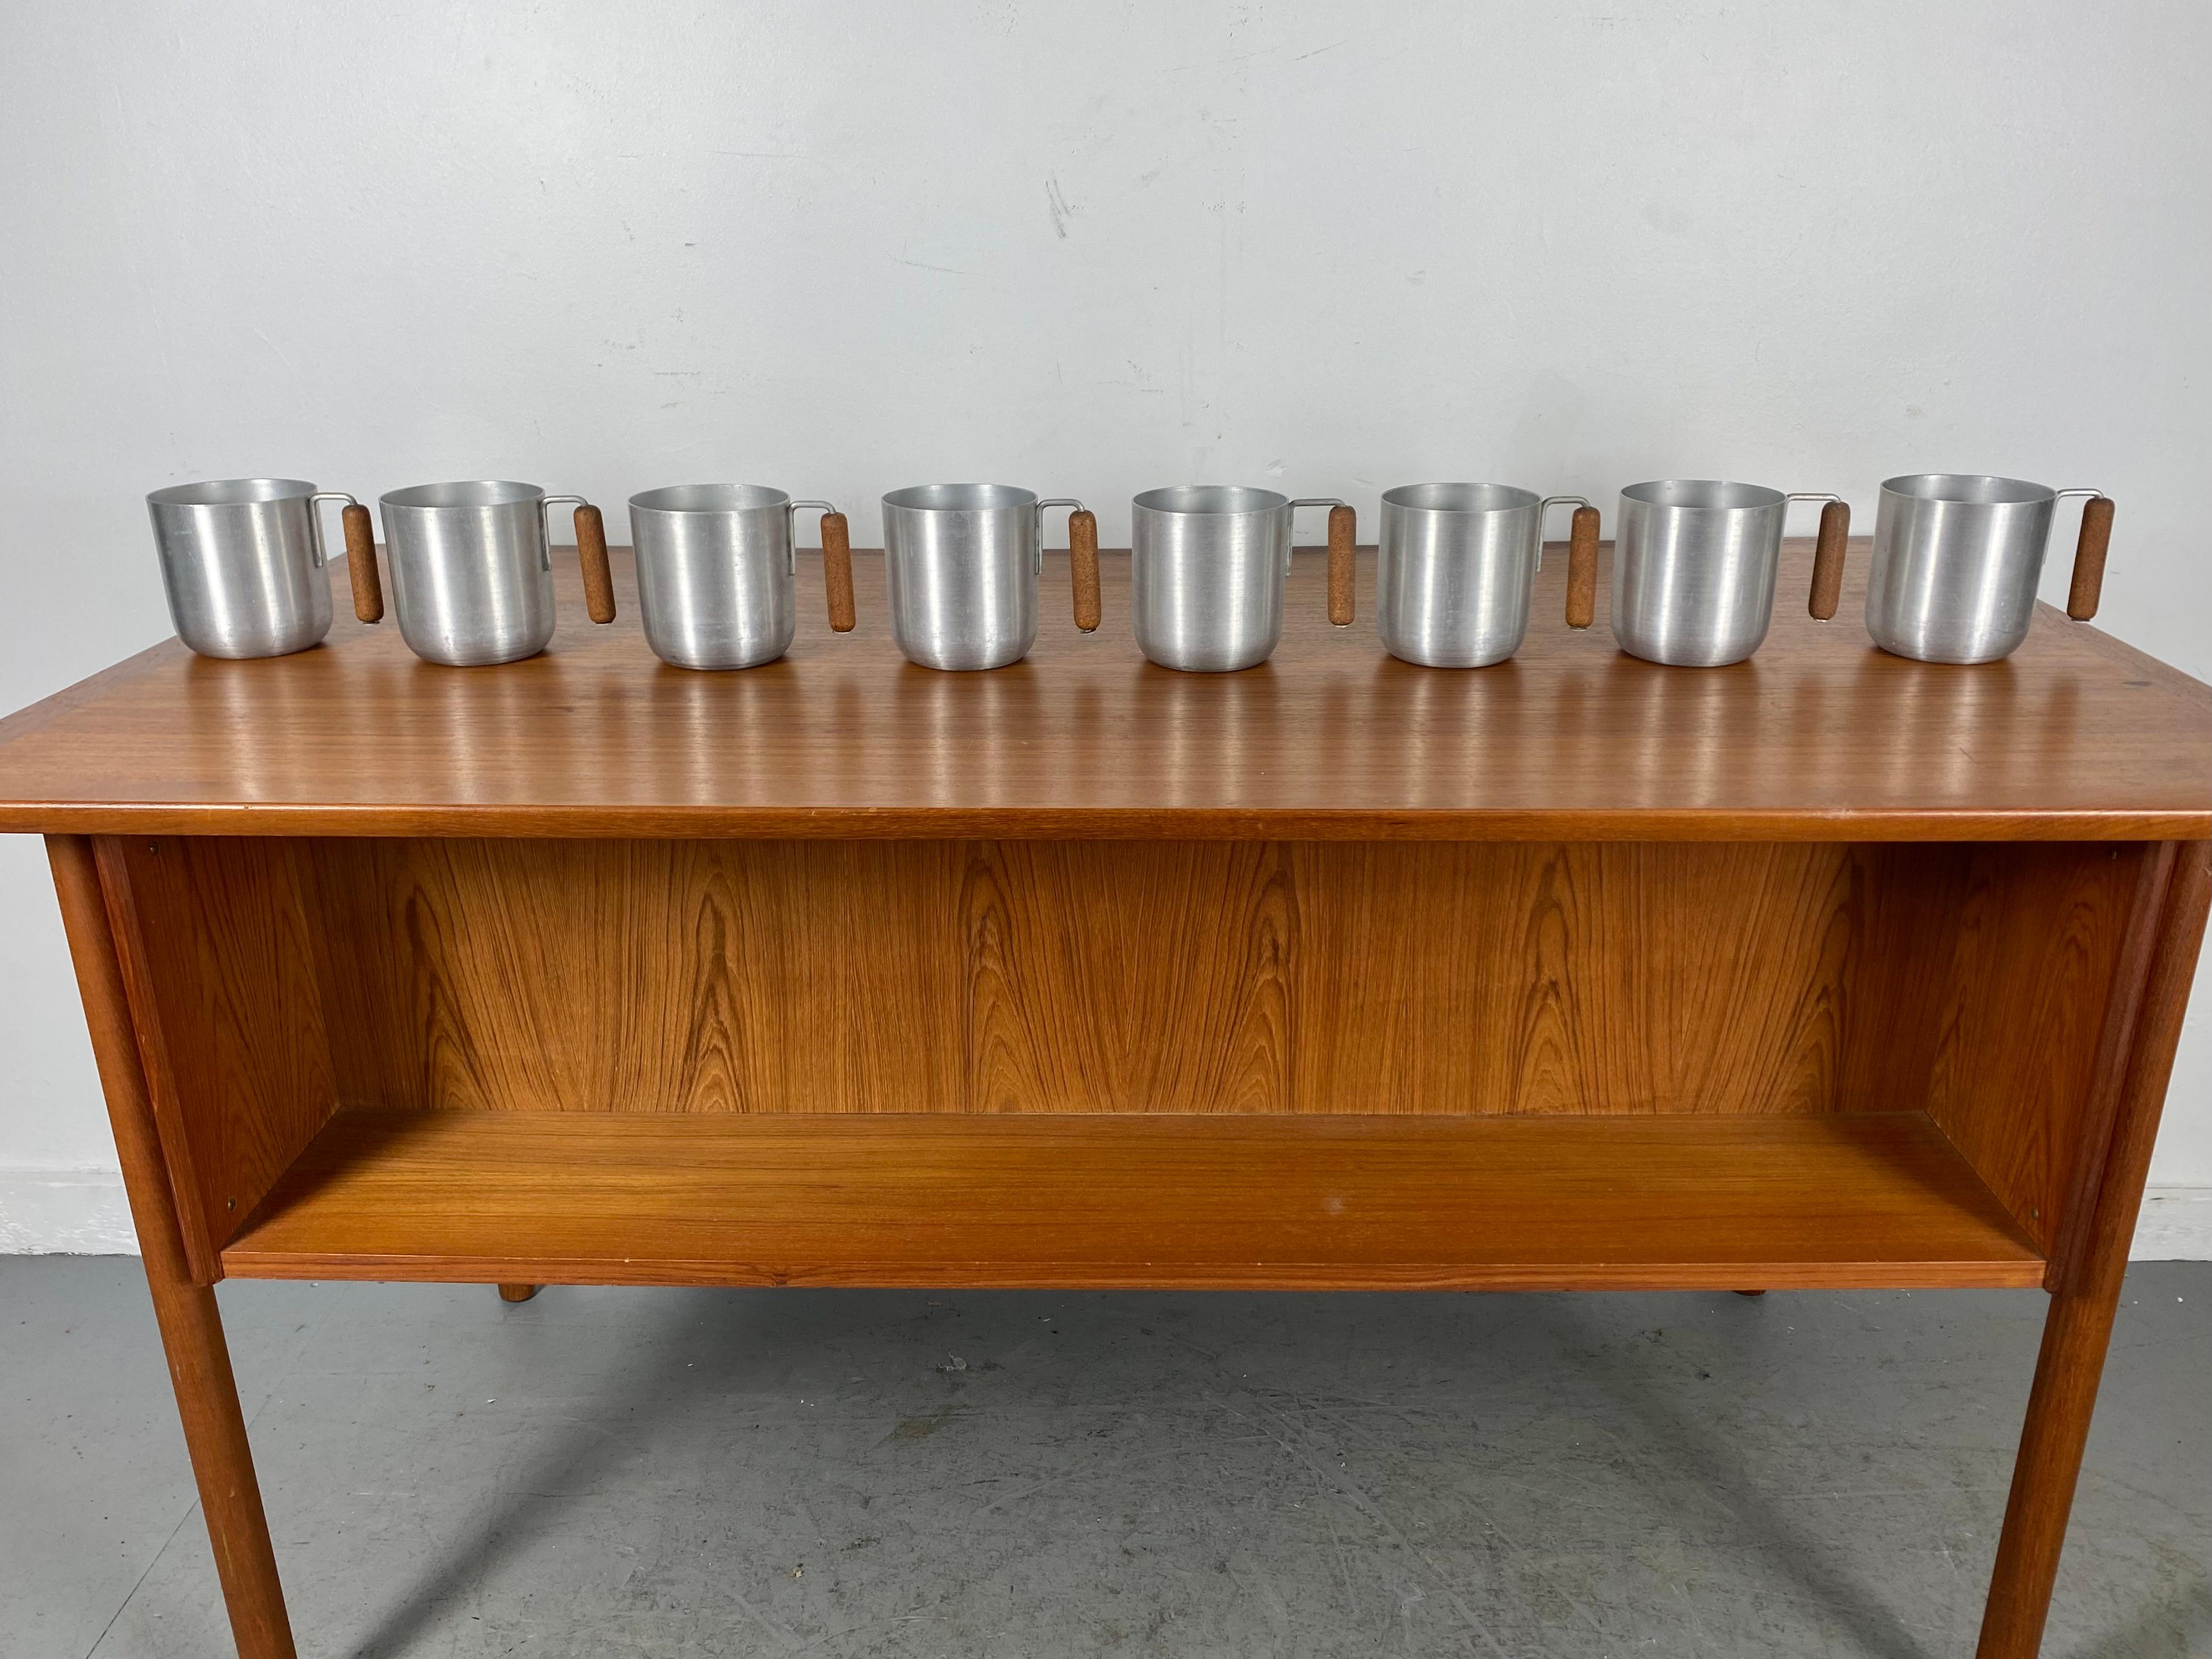 Rare Russel Wright Spun Aluminum and Cork Tankards / Mugs Set '8' For Sale 4